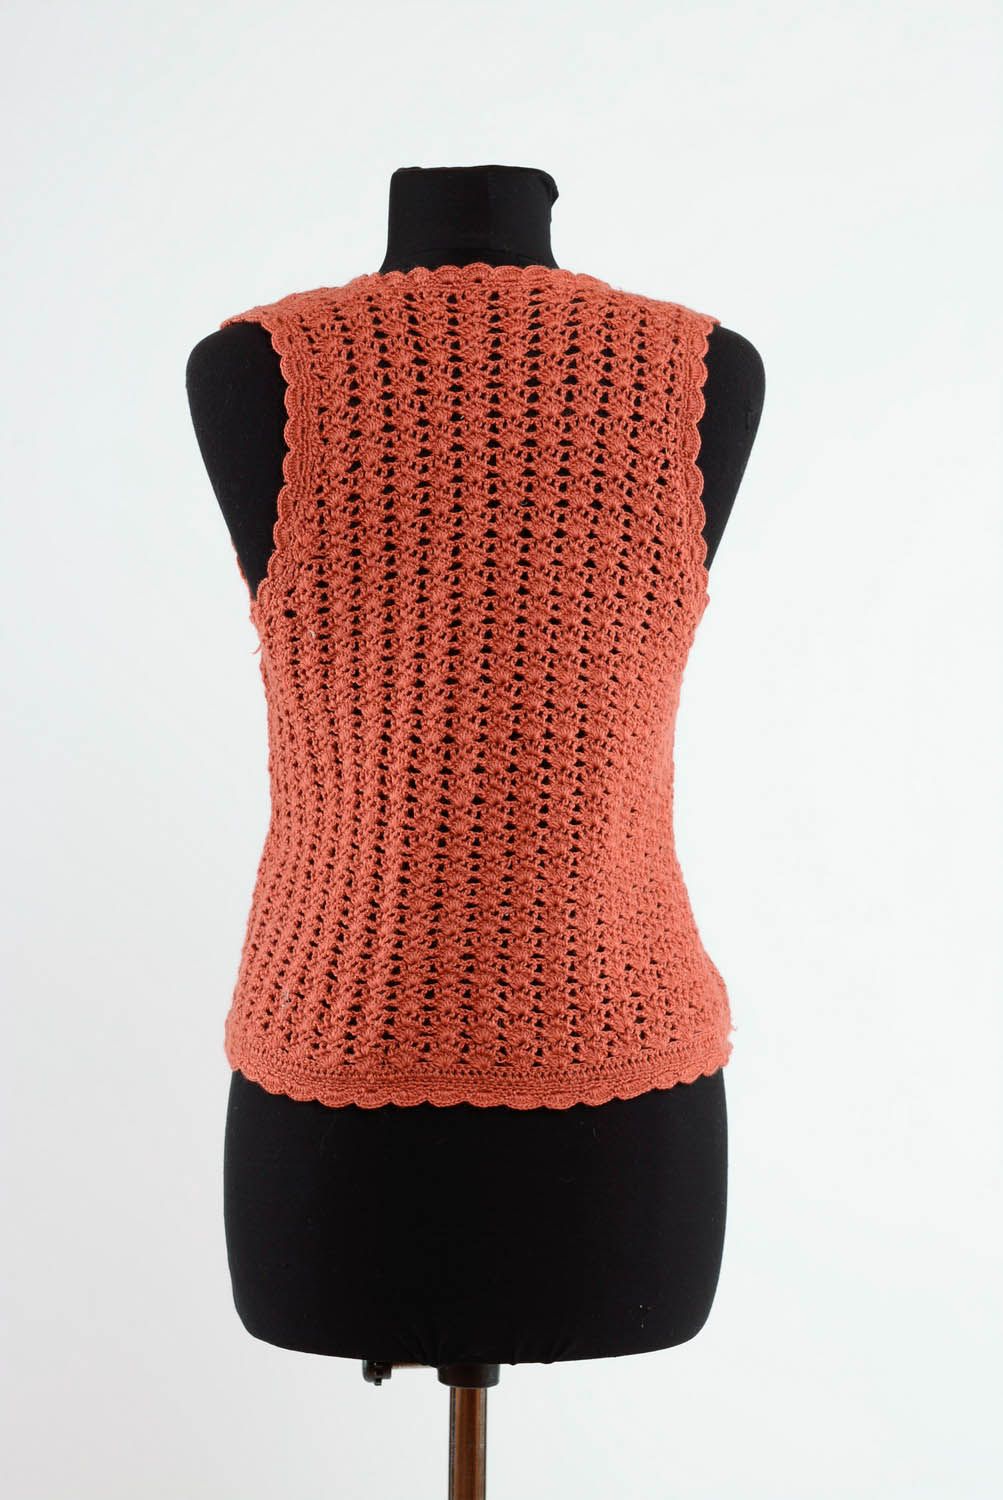 Crocheted vest photo 4